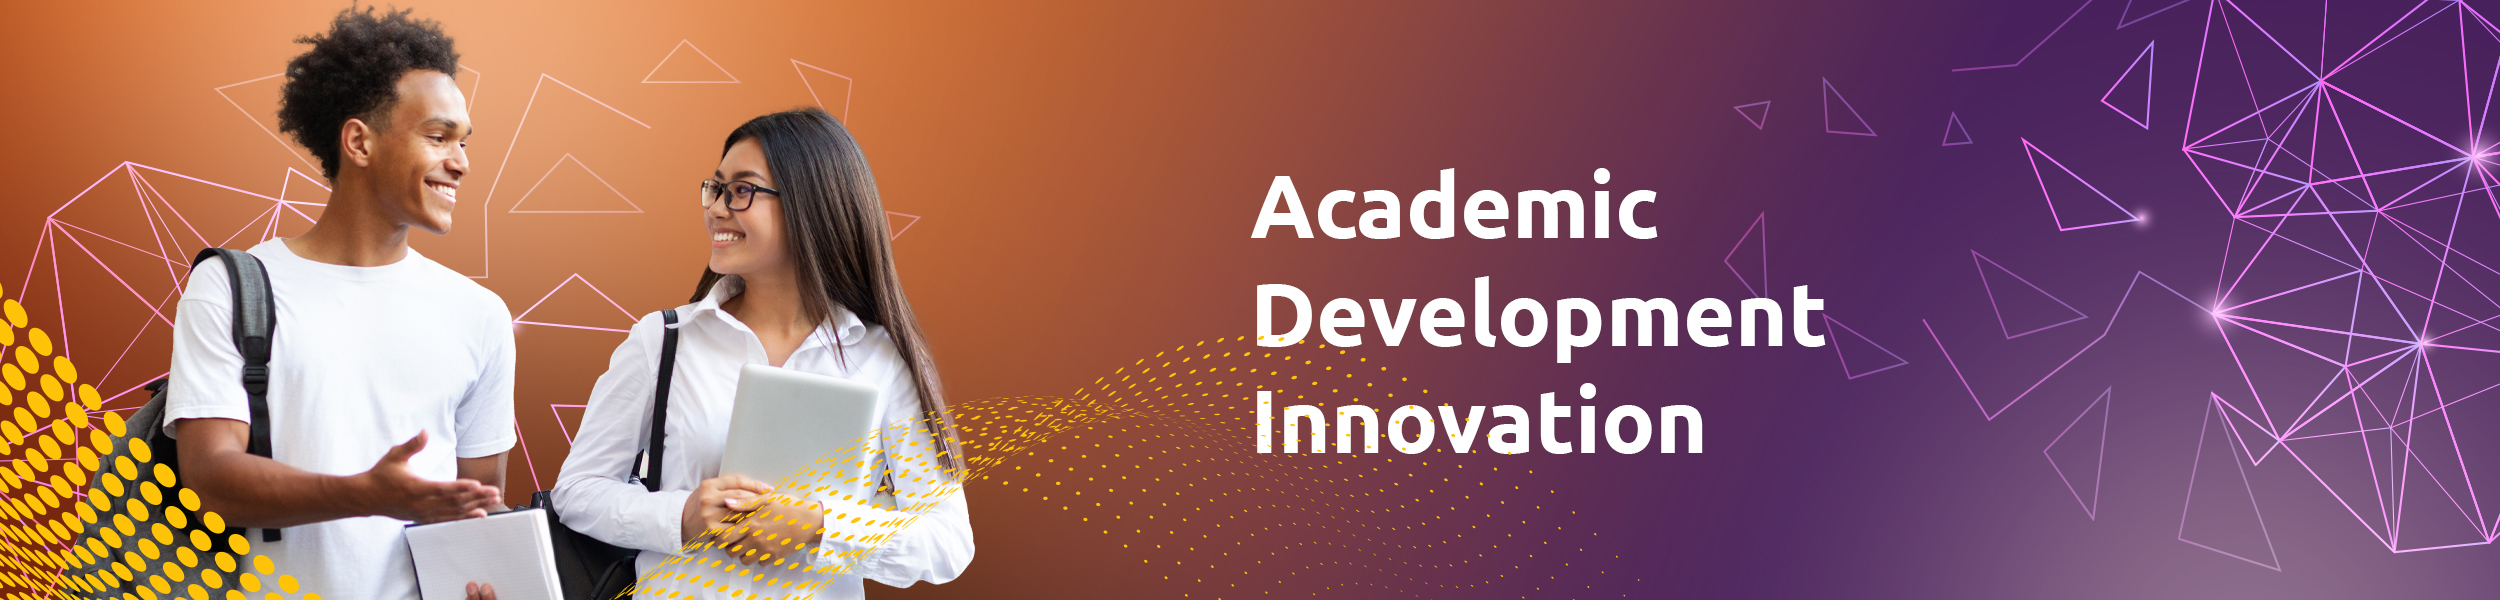 Adc Academic Development Innovation 1